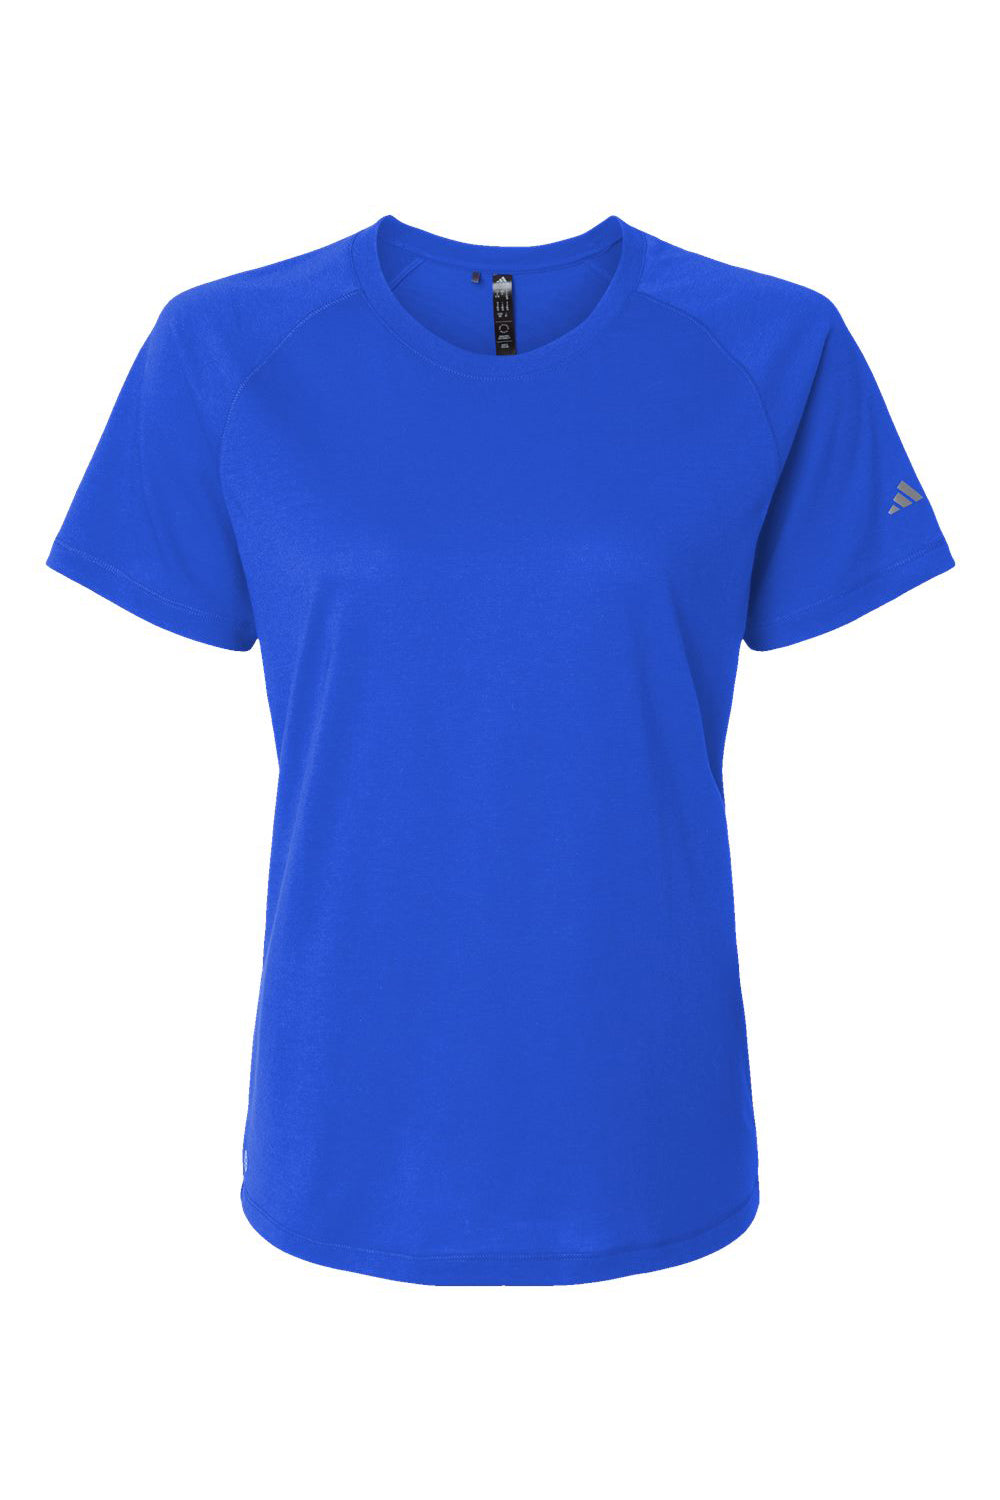 Adidas A557 Womens Short Sleeve Crewneck T-Shirt Collegiate Royal Blue Flat Front